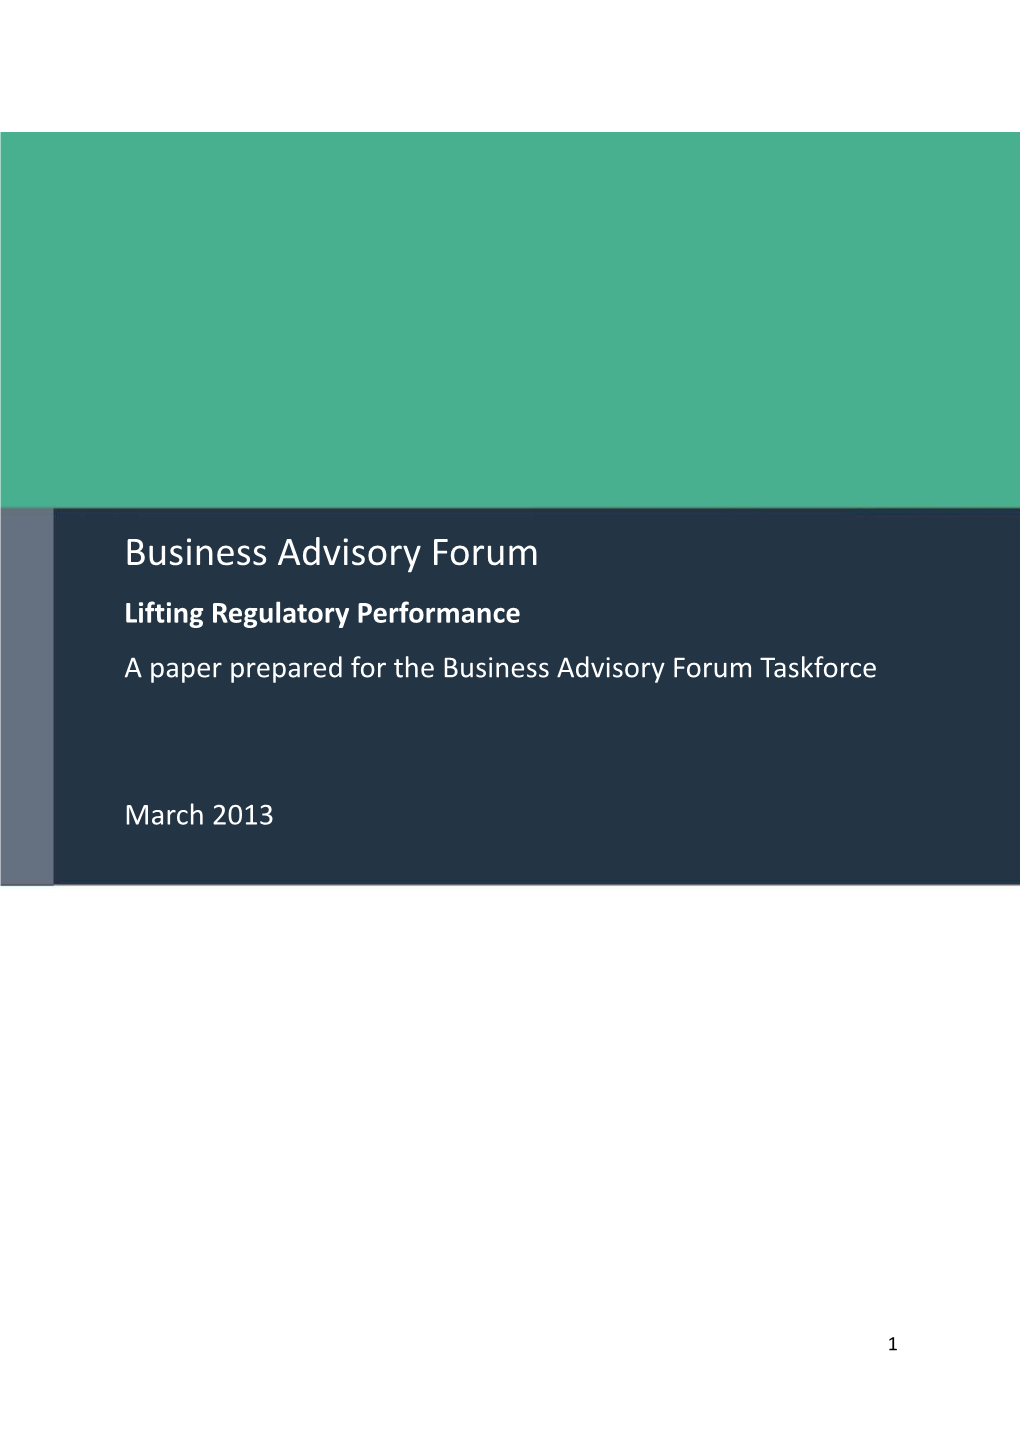 Business Advisory Forum - Lifting Regulatory Performance